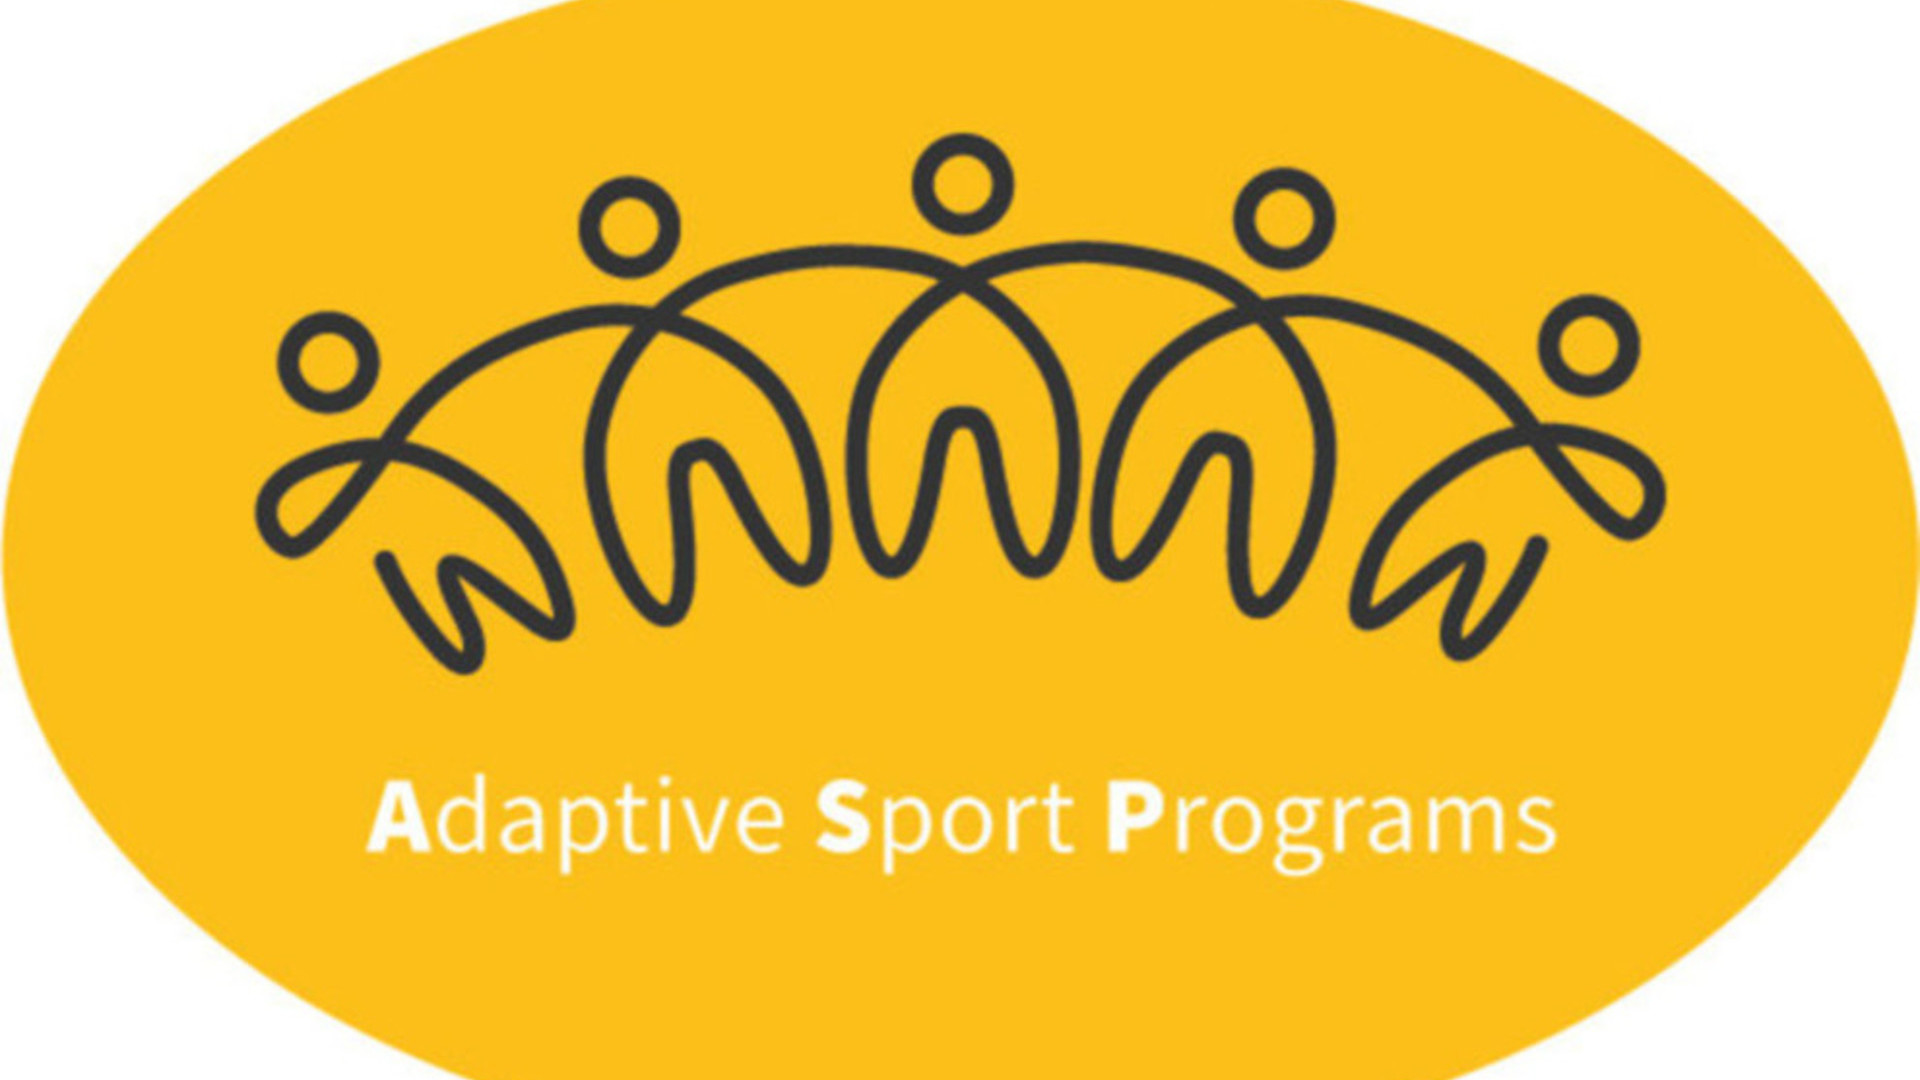 Adaptive sport programs